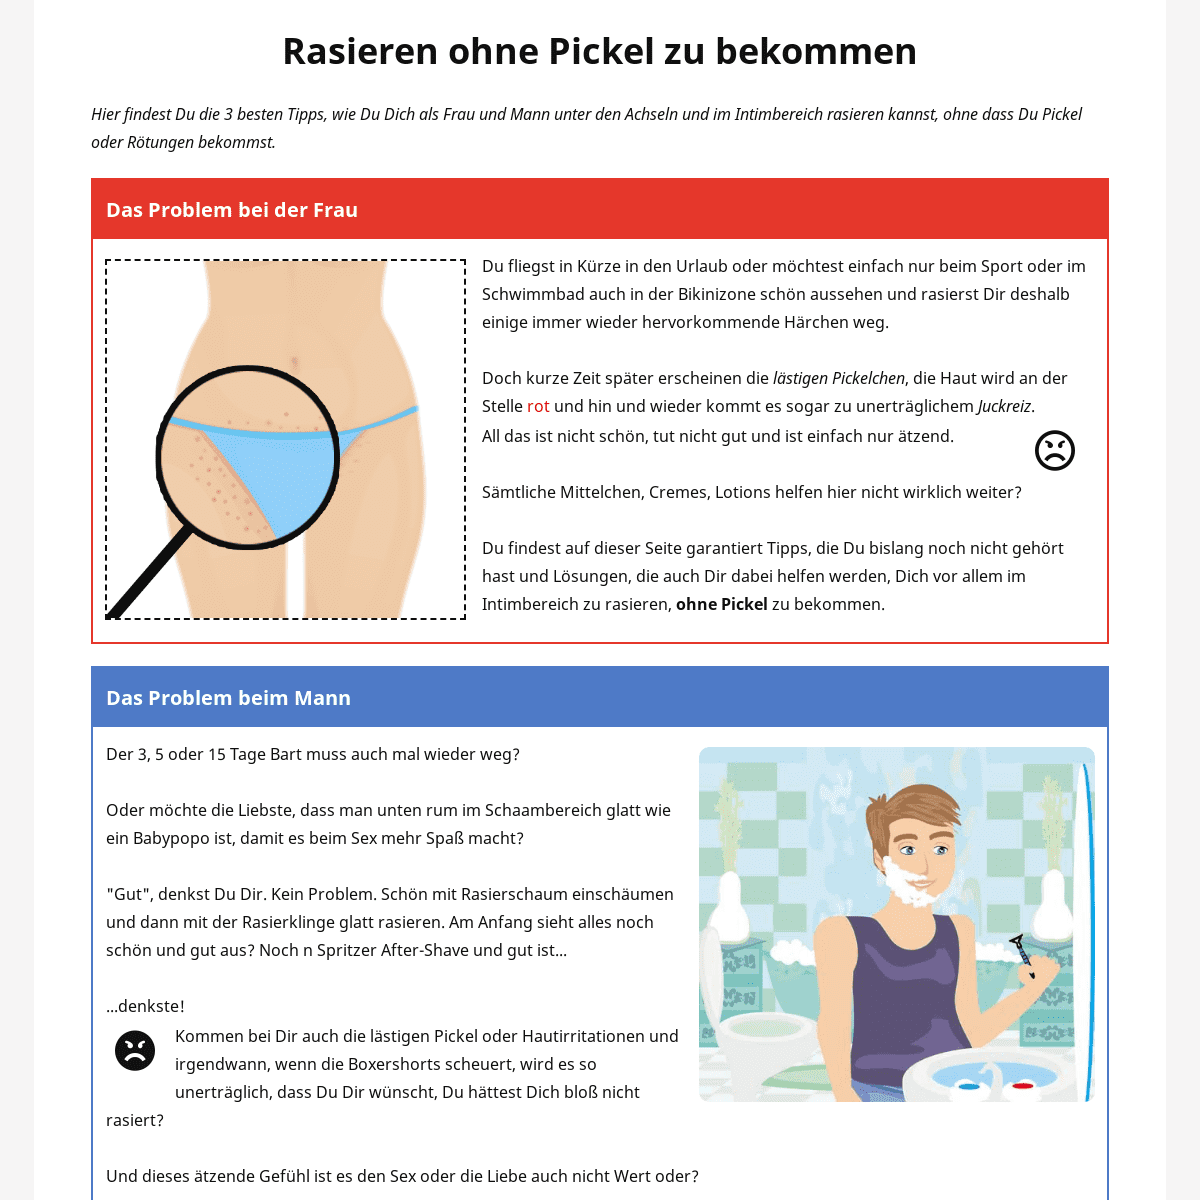 A complete backup of rasieren-ohne-pickel.de